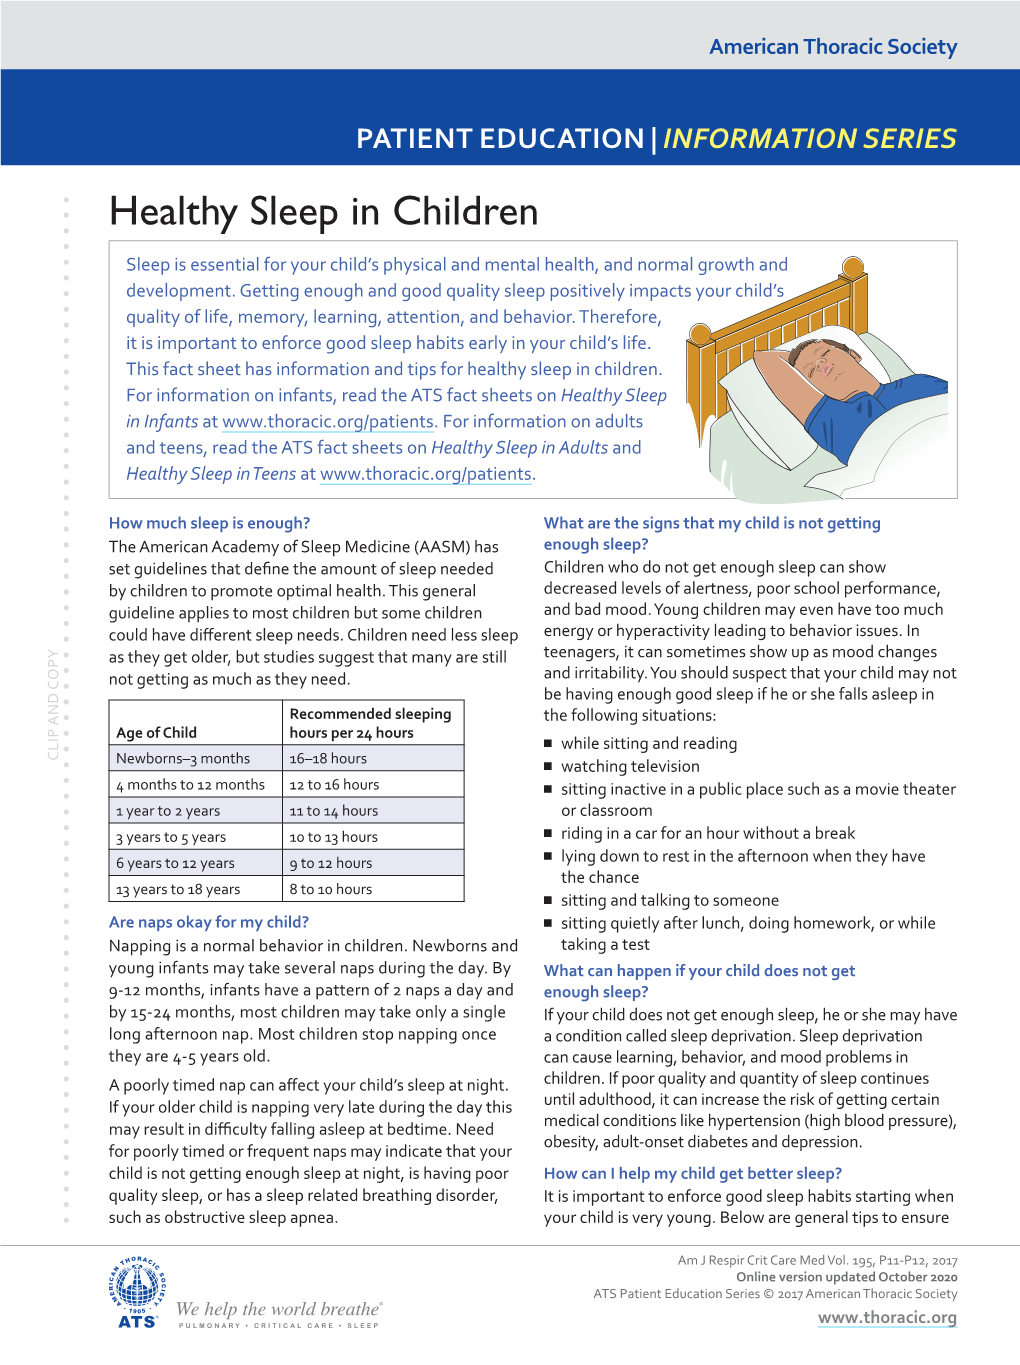 Healthy Sleep in Children